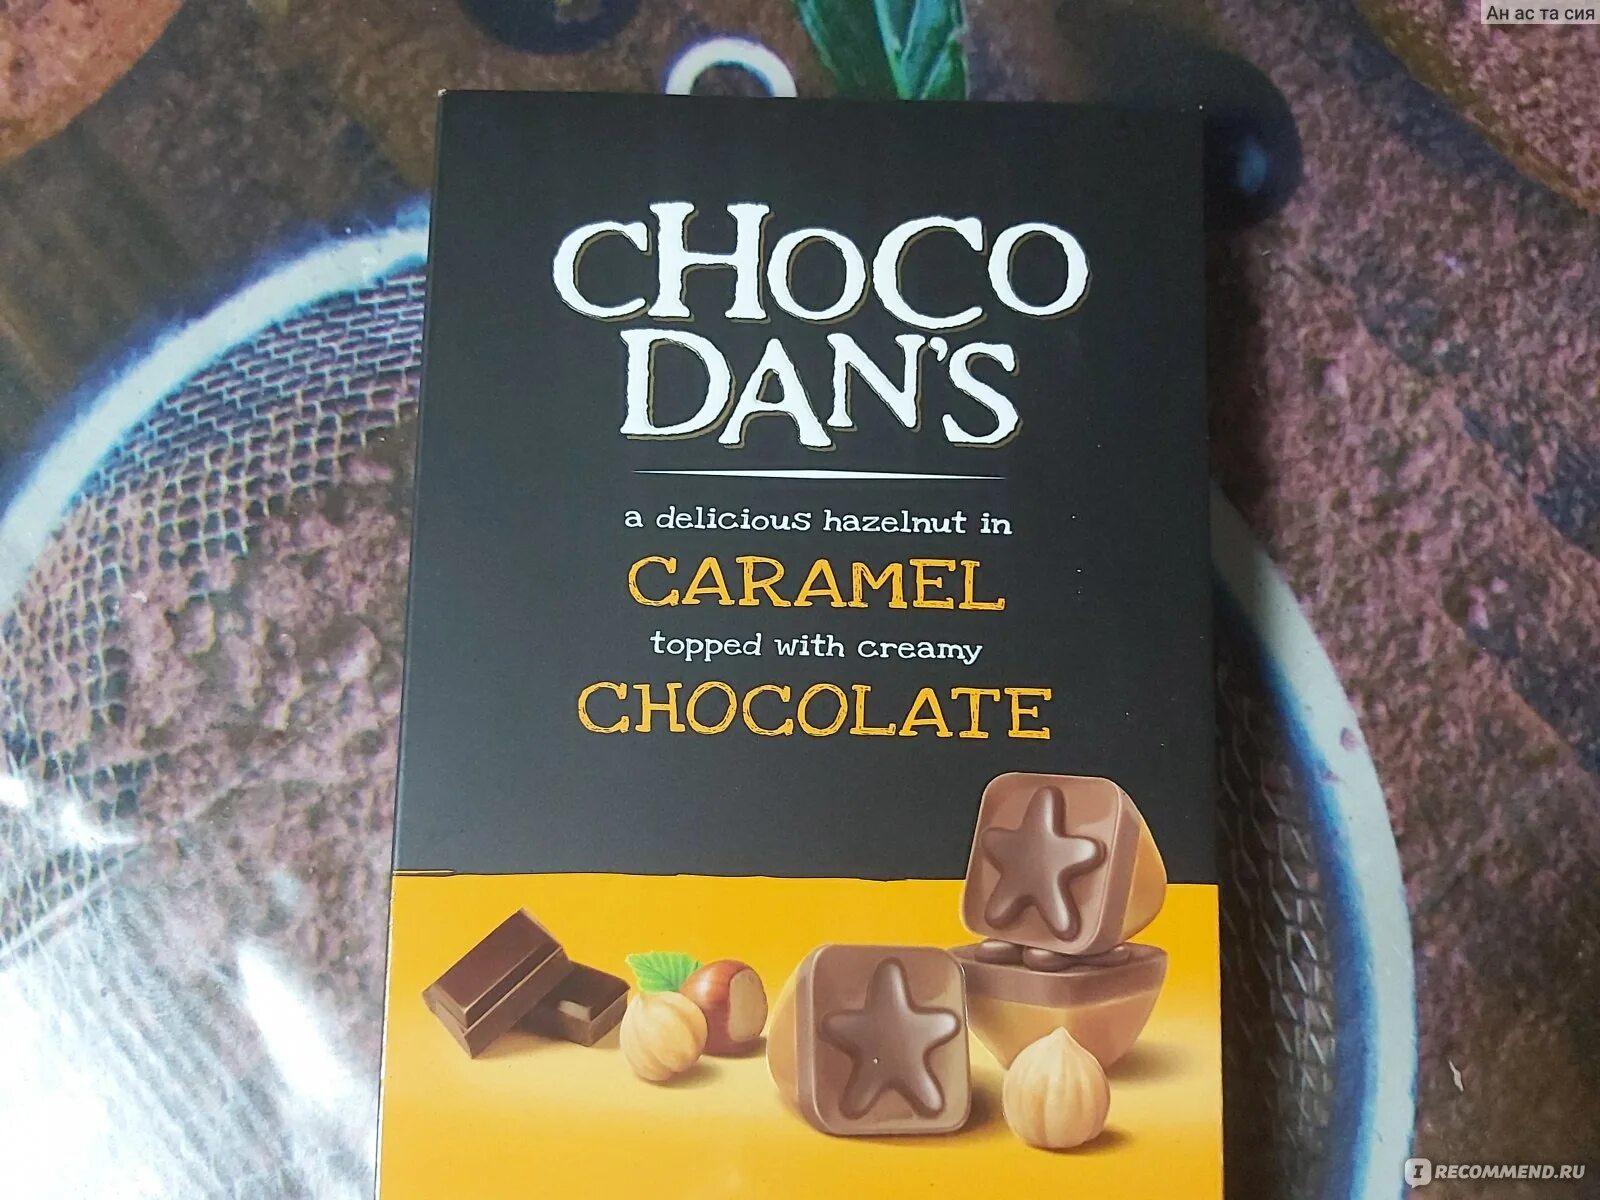 Чоко чанга. Конфеты Шокодан'с с фундуком. Чоко данс конфеты. Шоколад Choco dans. Конфеты с фундуком и карамелью в коробке.